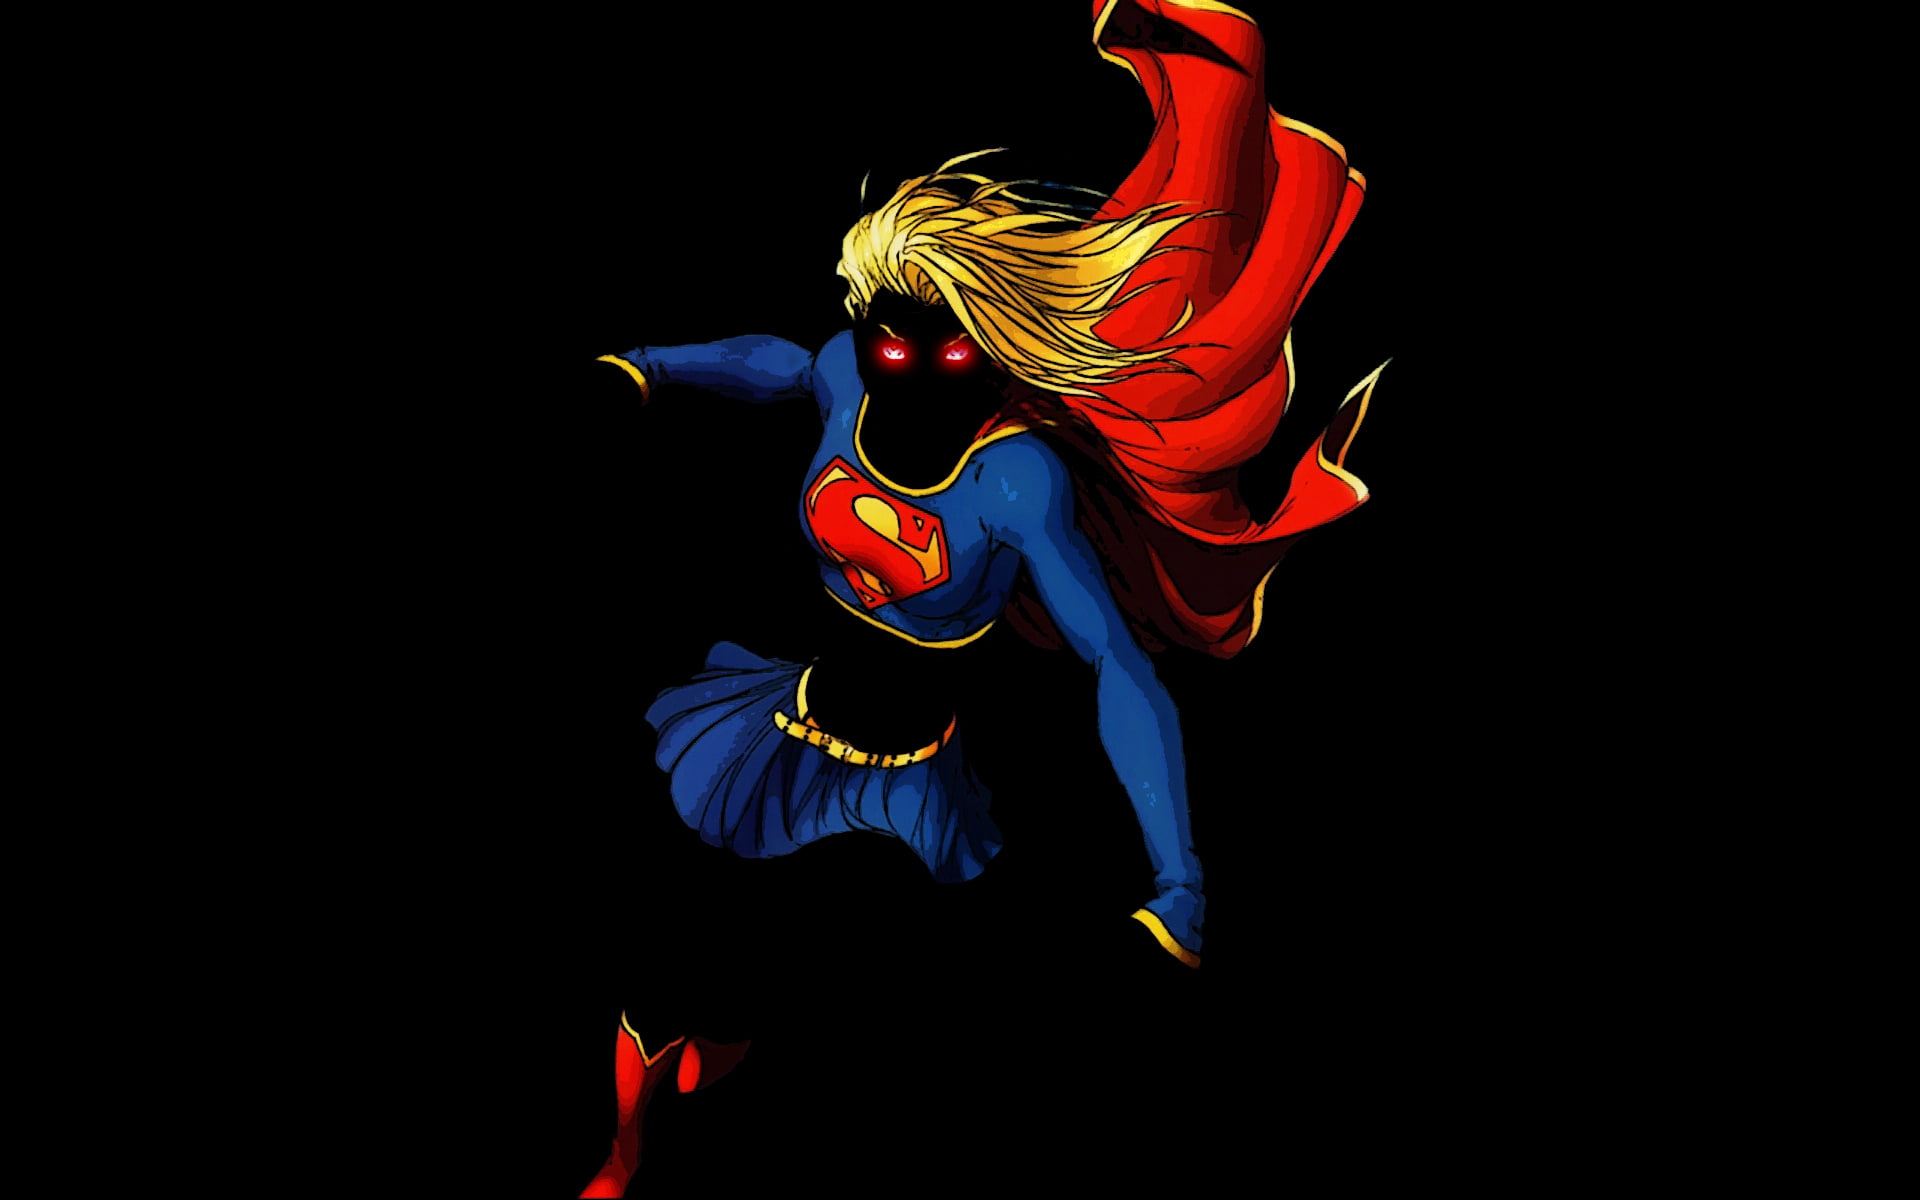 Supergirl wallpaper, DC Comics, Supergirl, superhero, superheroines